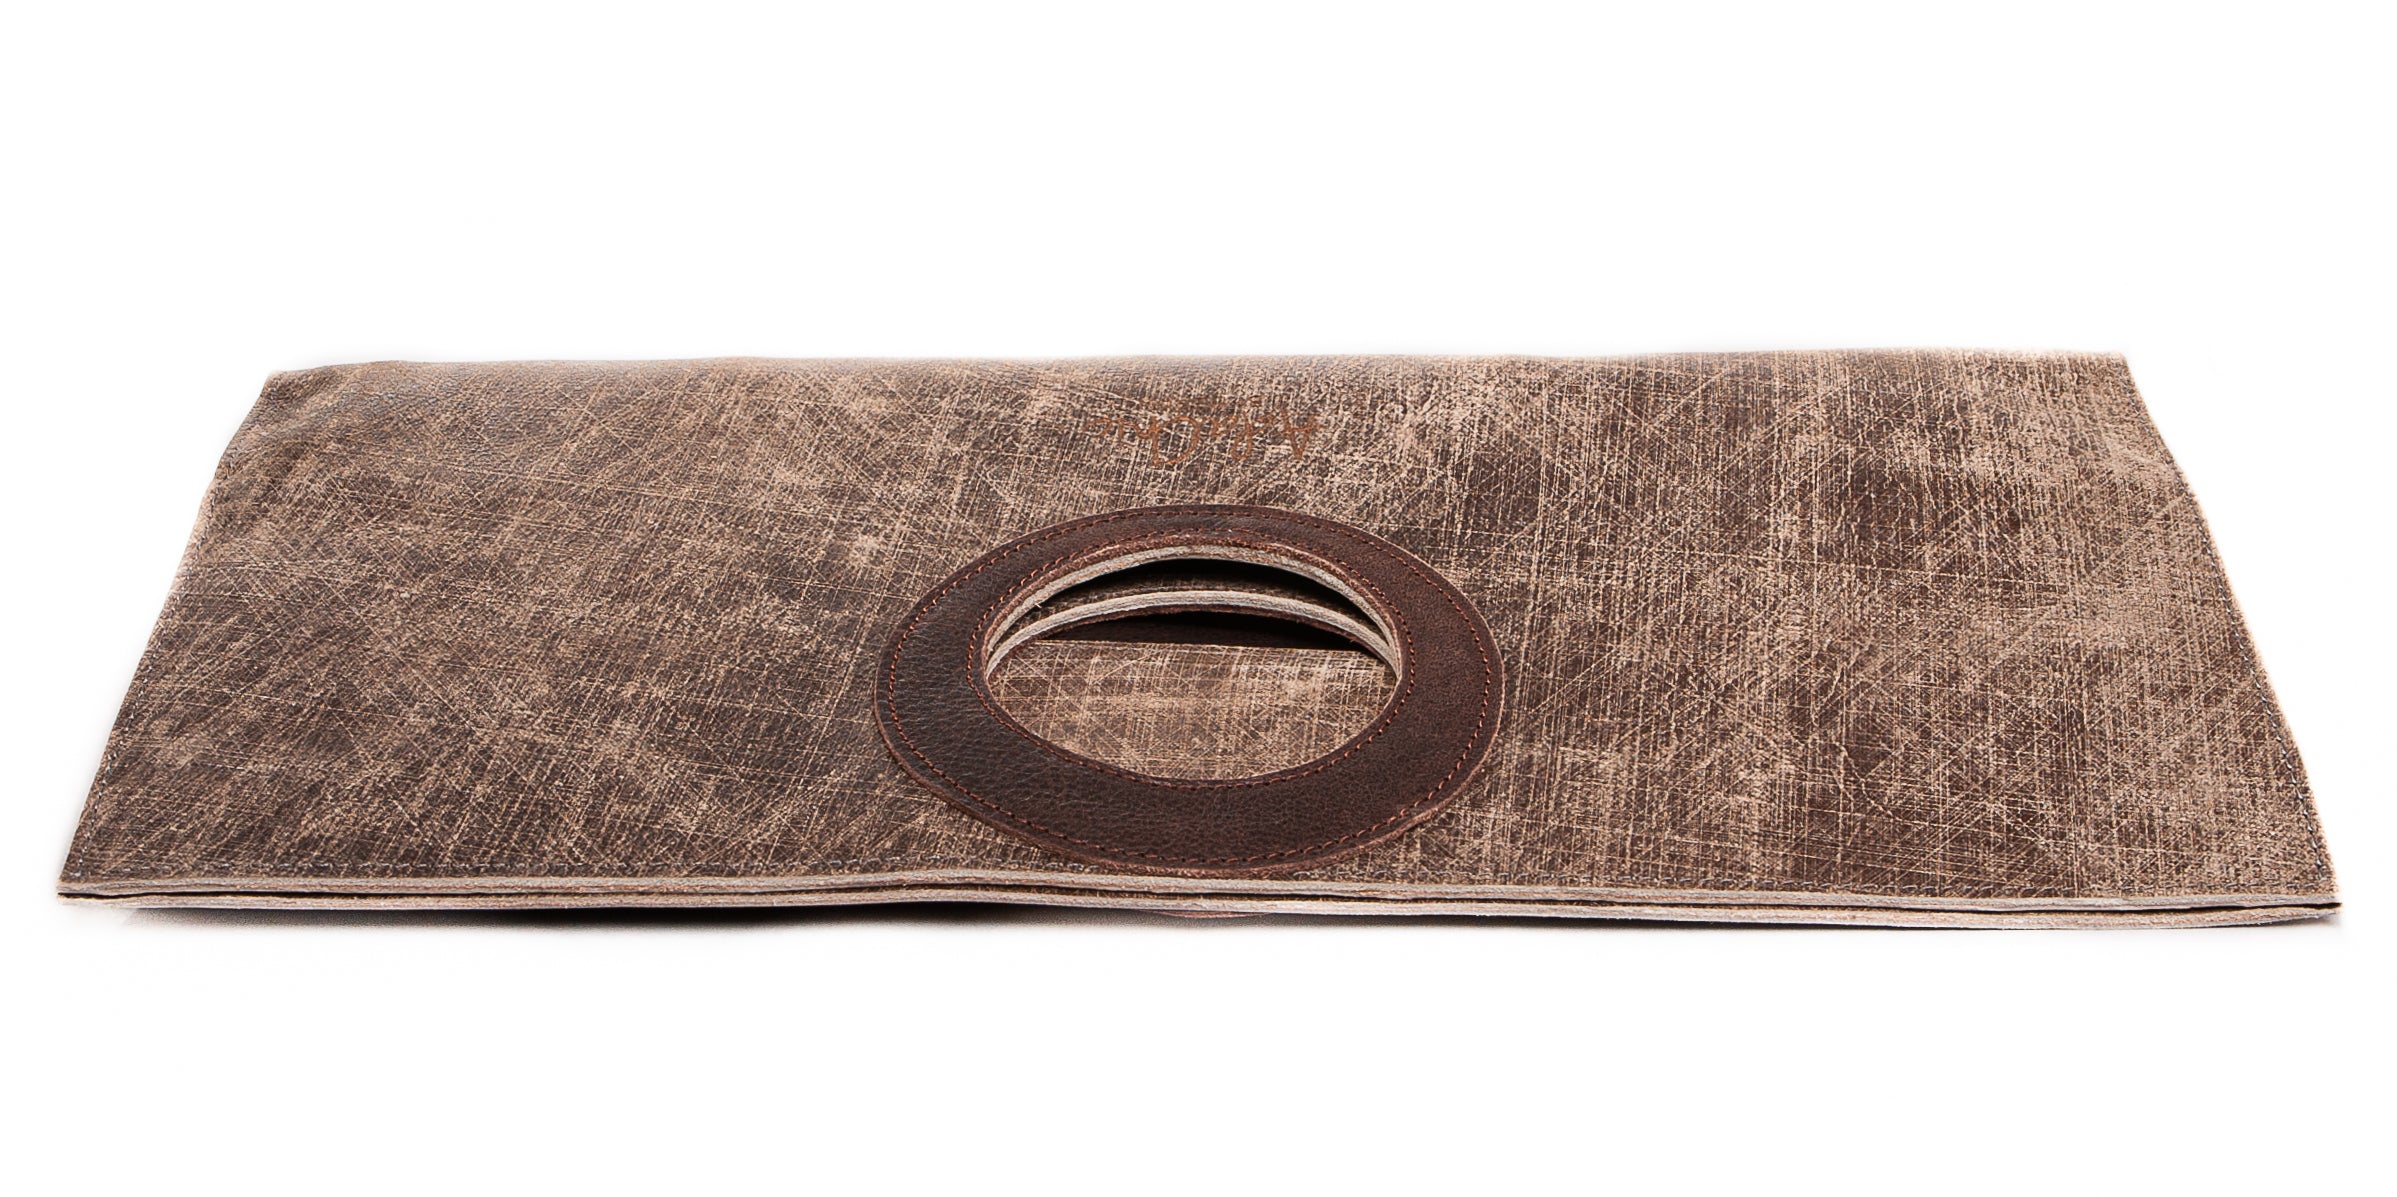 Gifti Fold Over Leather Clutch/Handbag with Top Handle (Grey & Chocolate)